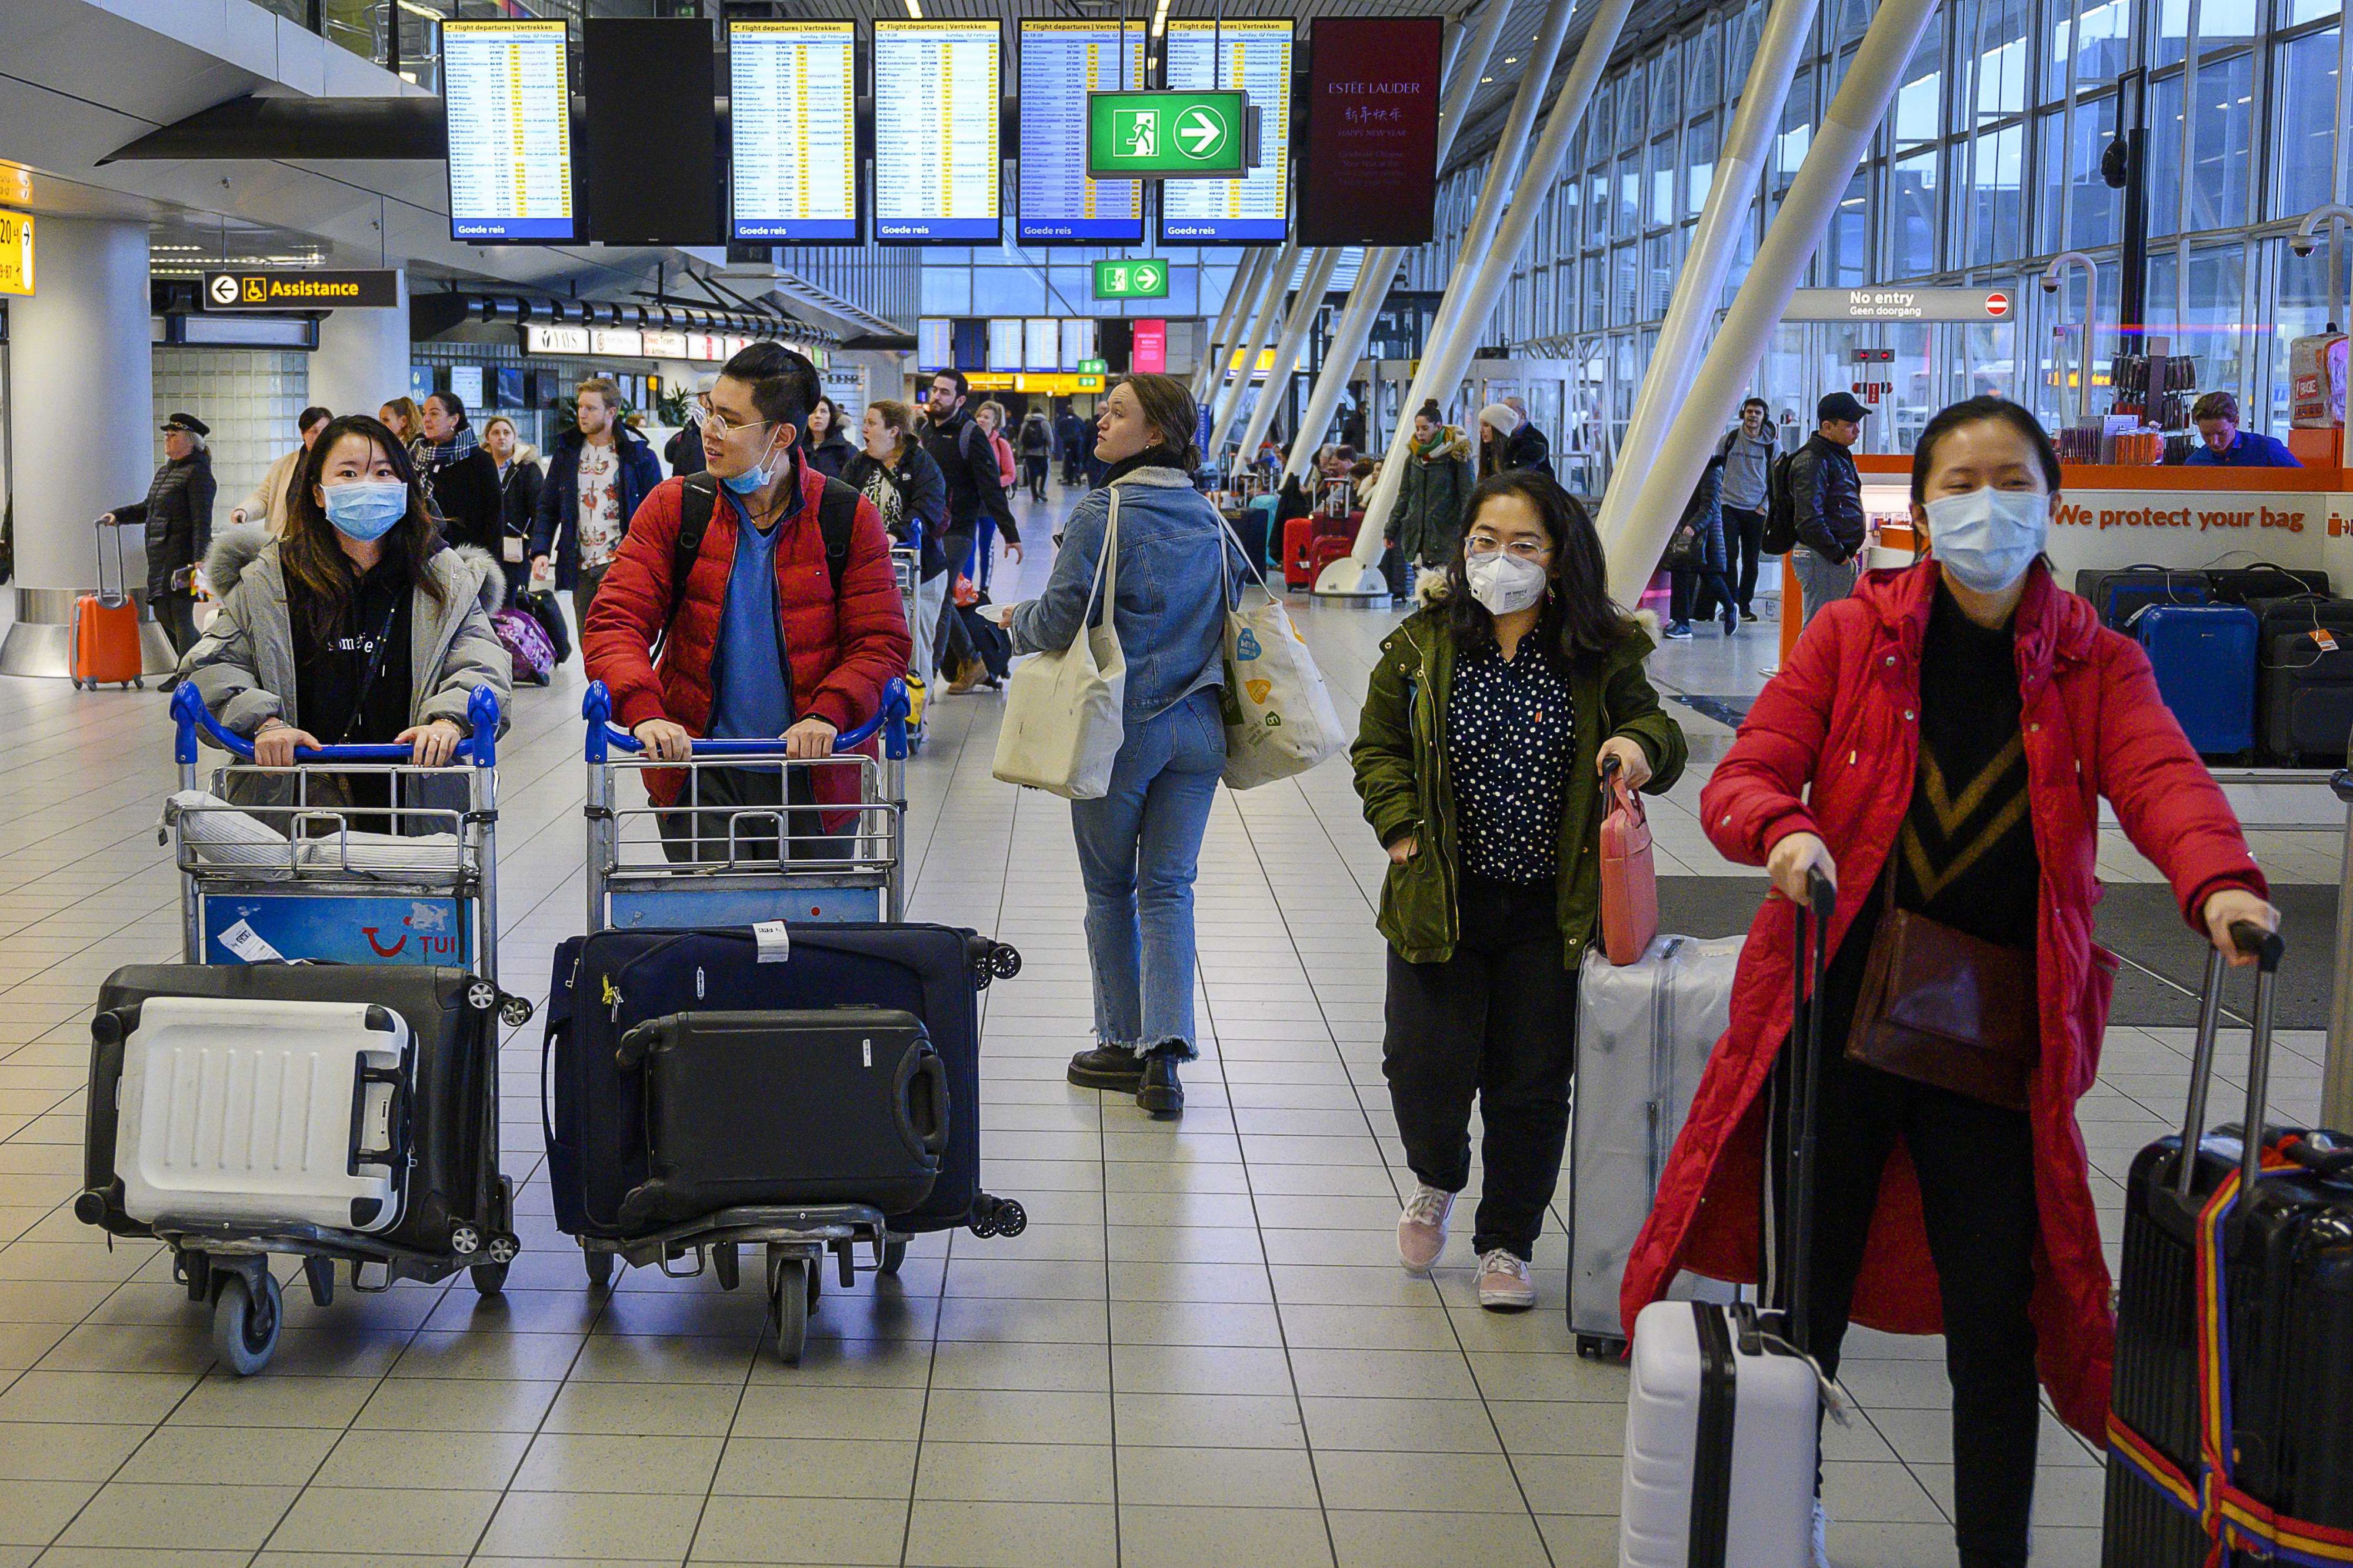 KLM stuurt mondkapjes naar China vanwege coronavirus